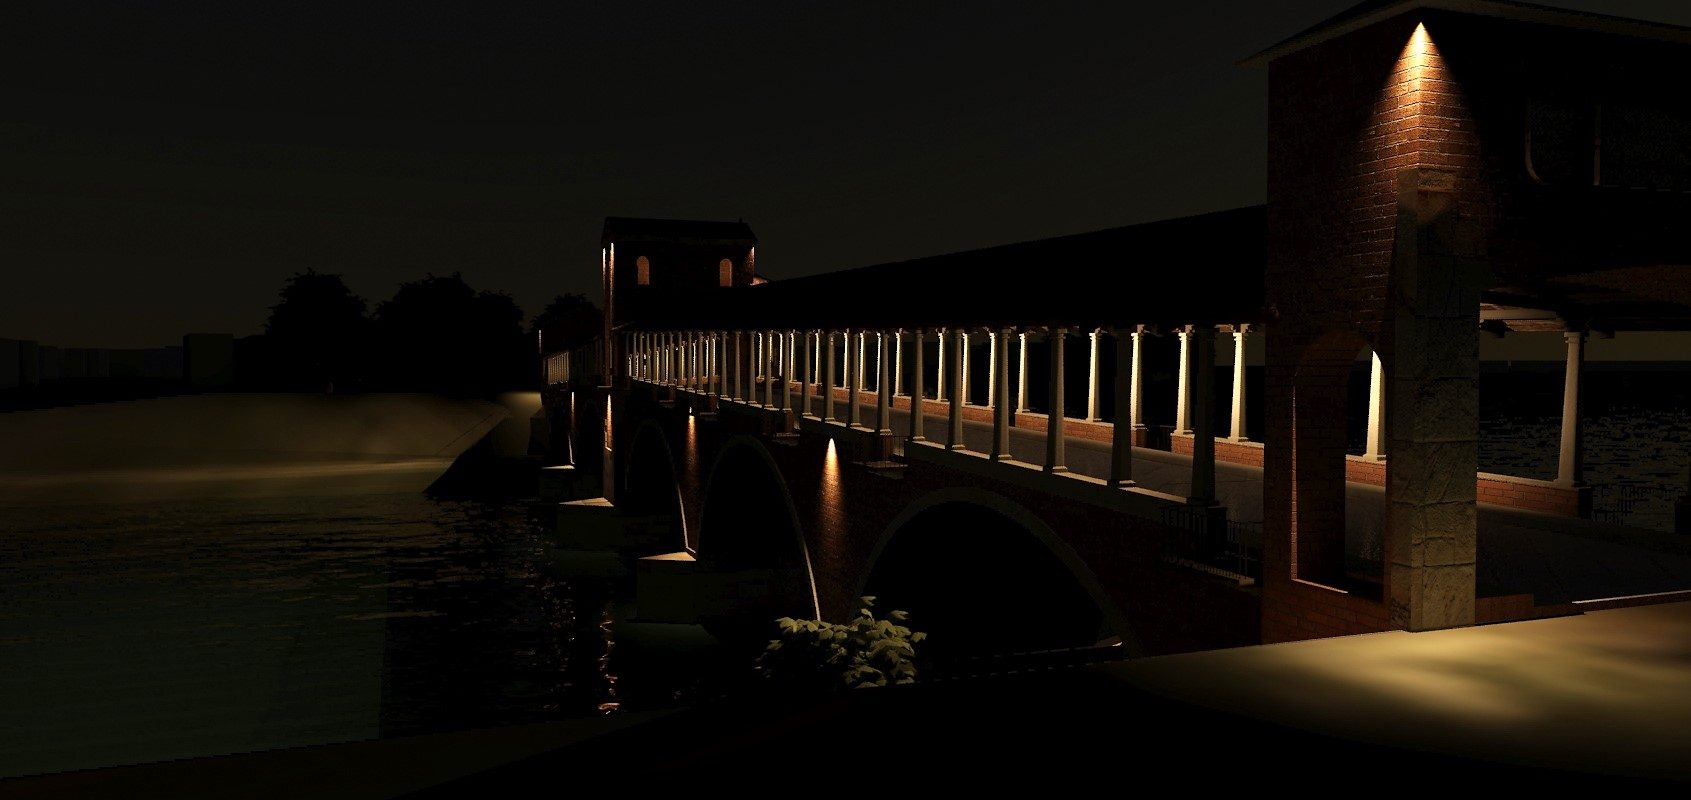 Permalink to: Pavia – Ponte coperto – Simulazione notturna